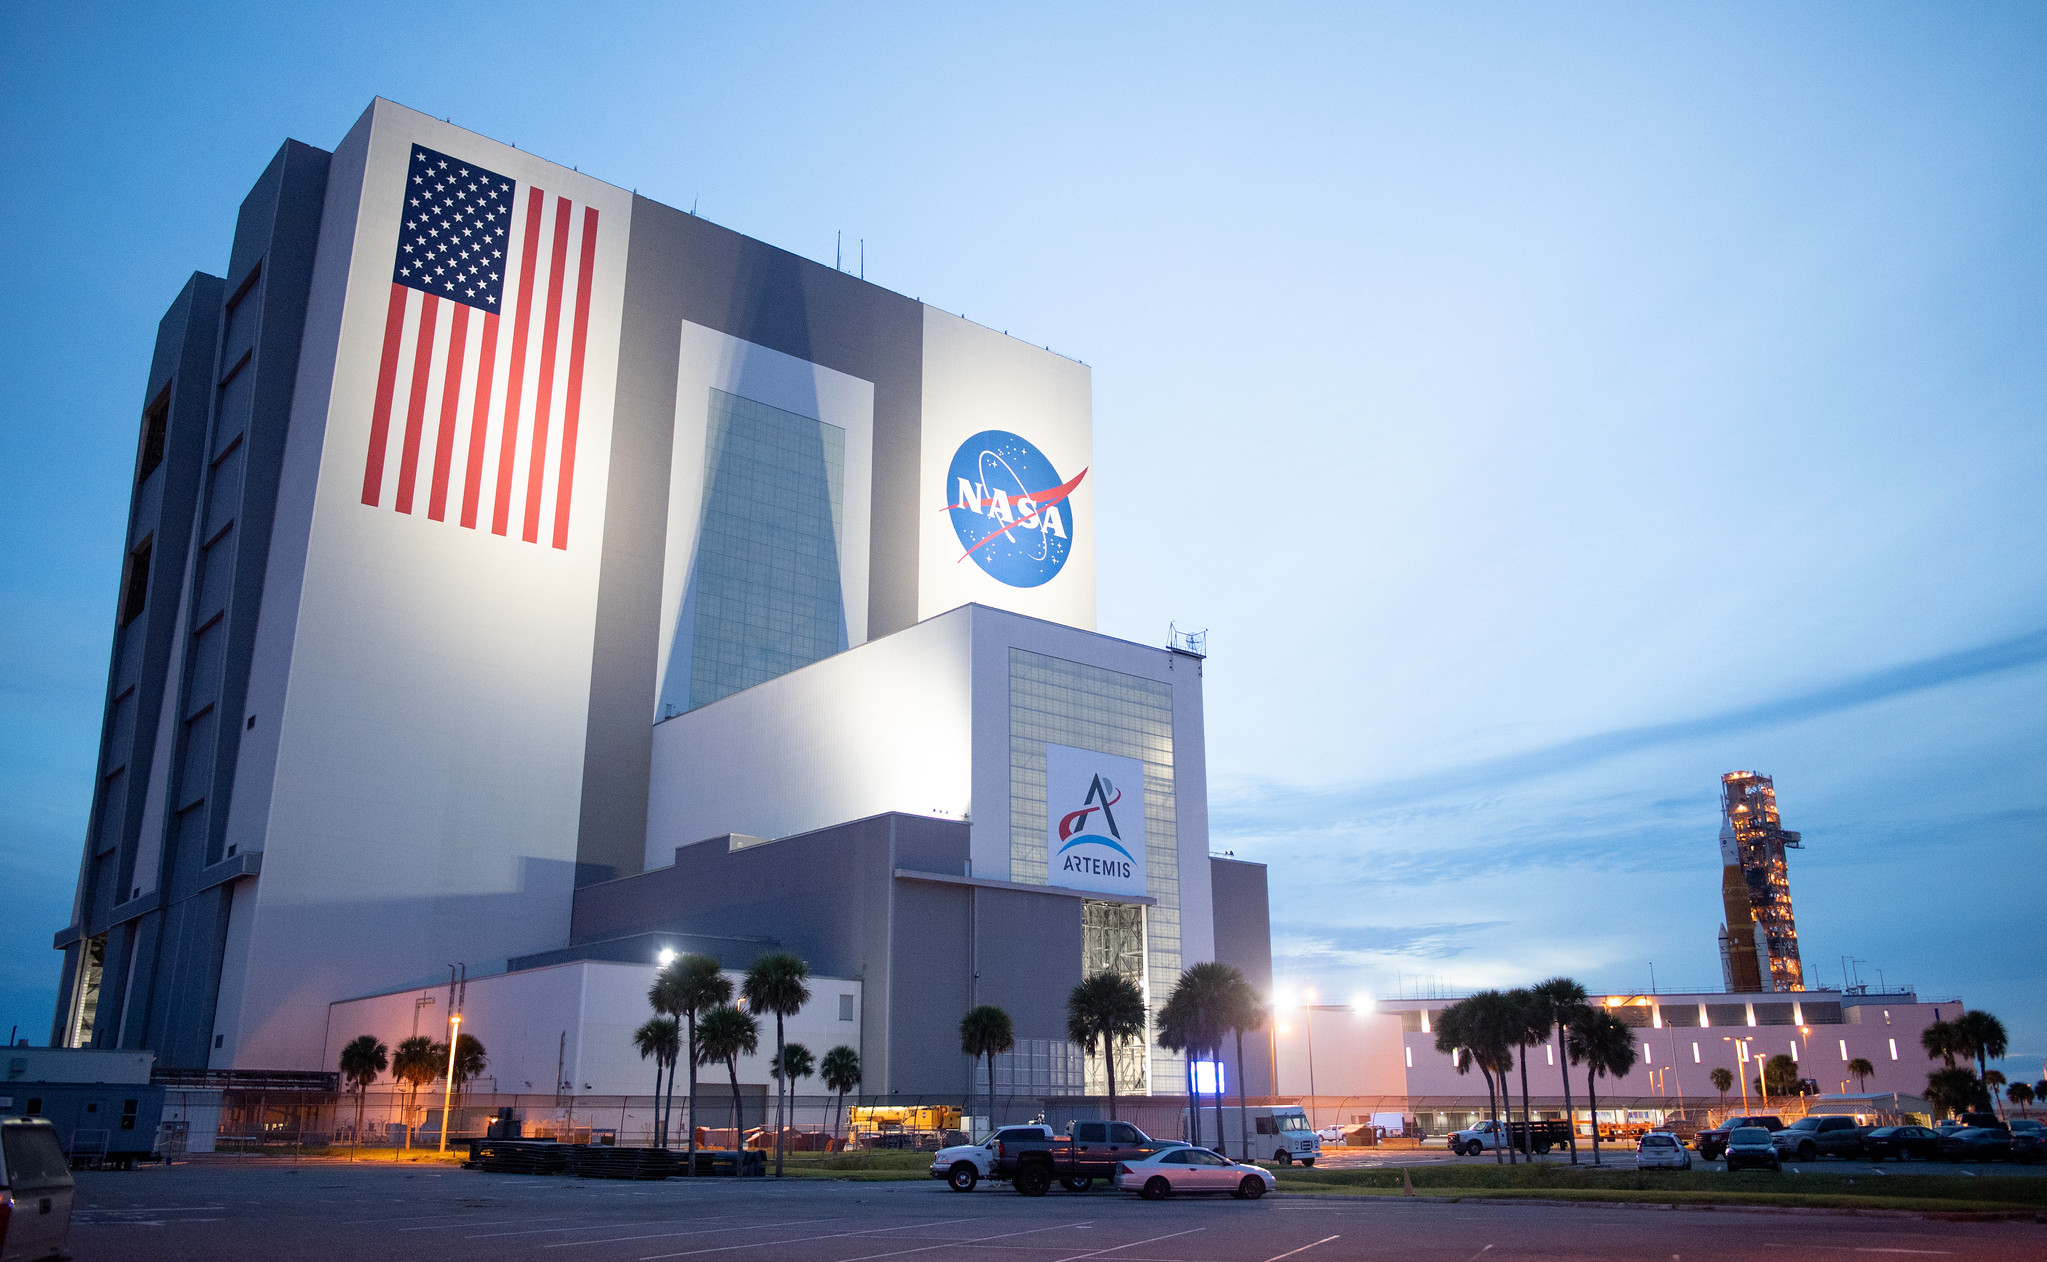 NASA's Artemis 1-maanraket nadert Kennedy Space Center's Vehicle Assembly Building op 27 september 2022 nadat hij van lanceerplatform 39B is gerold om orkaan Ian uit te rijden.